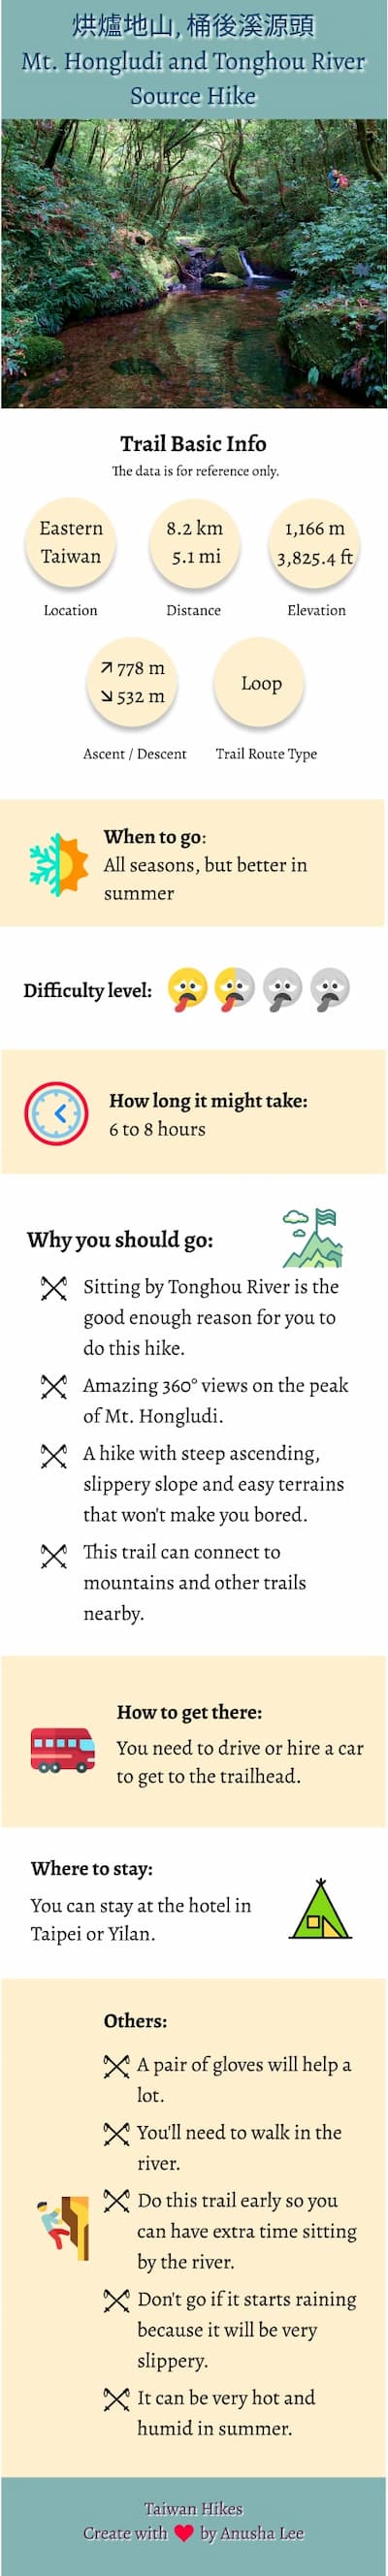 Tonghou river and Mt. Hongludi infographic